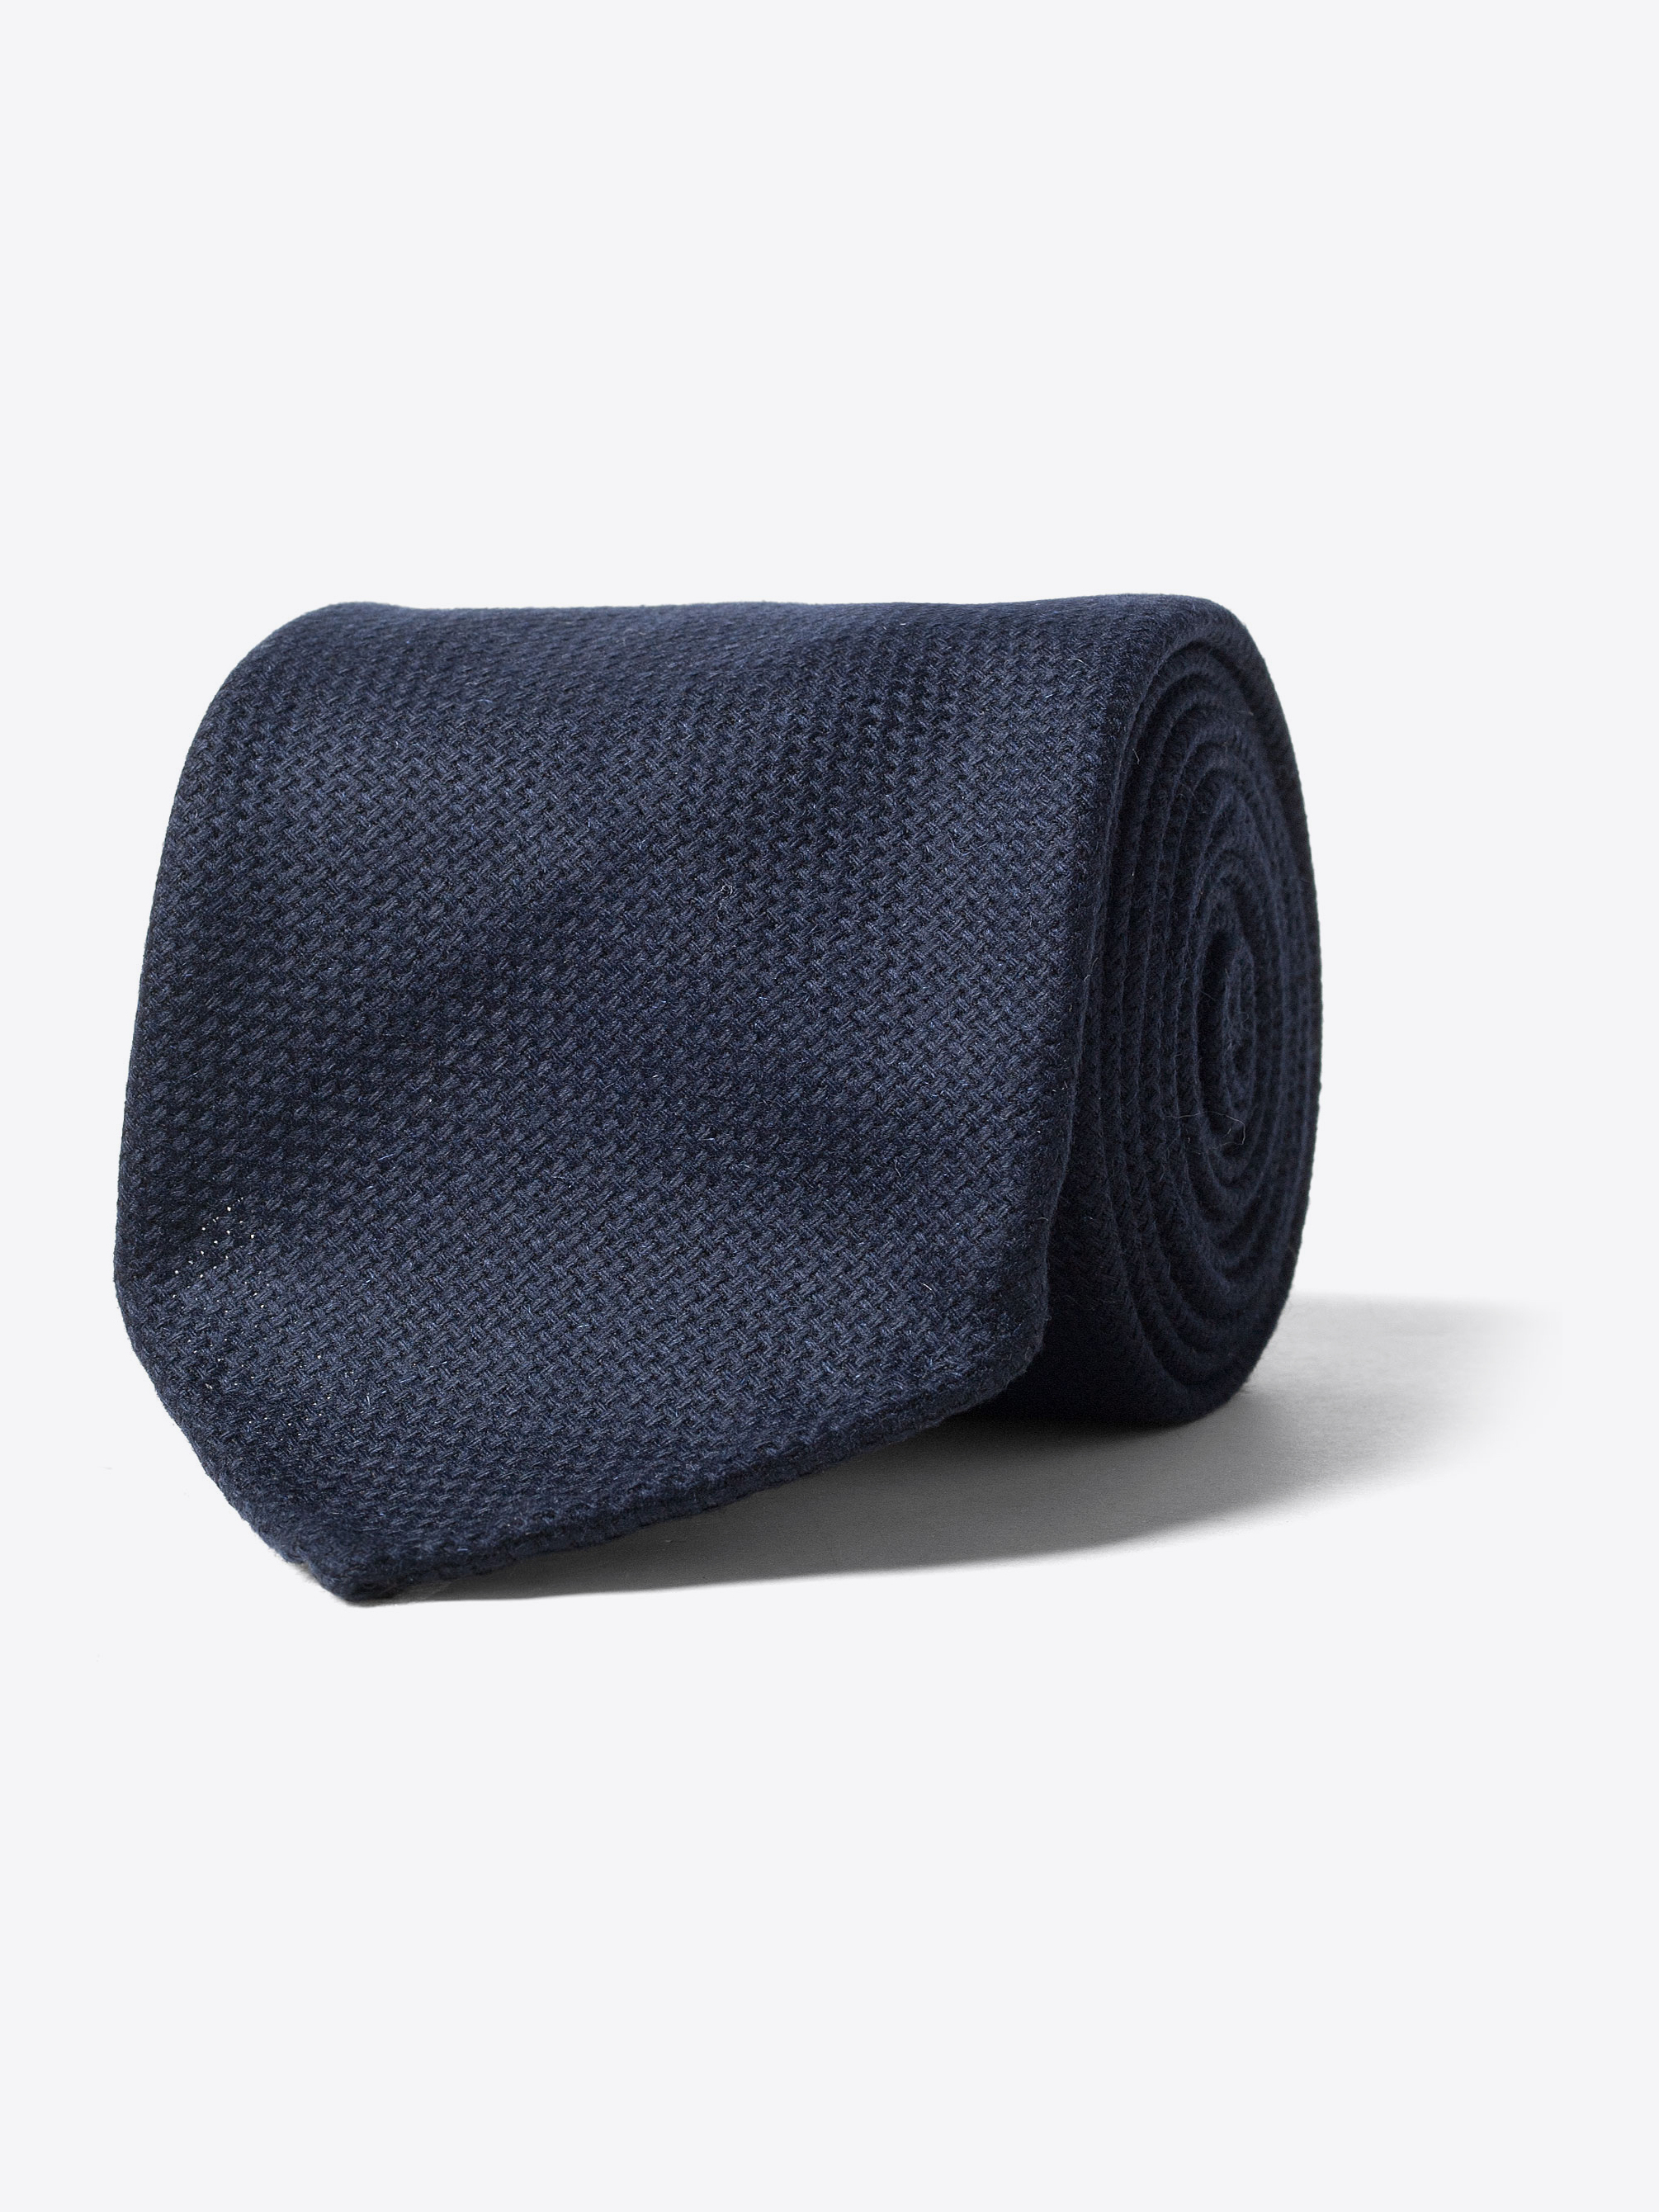 Zoom Image of Navy Textured Wool Untipped Tie